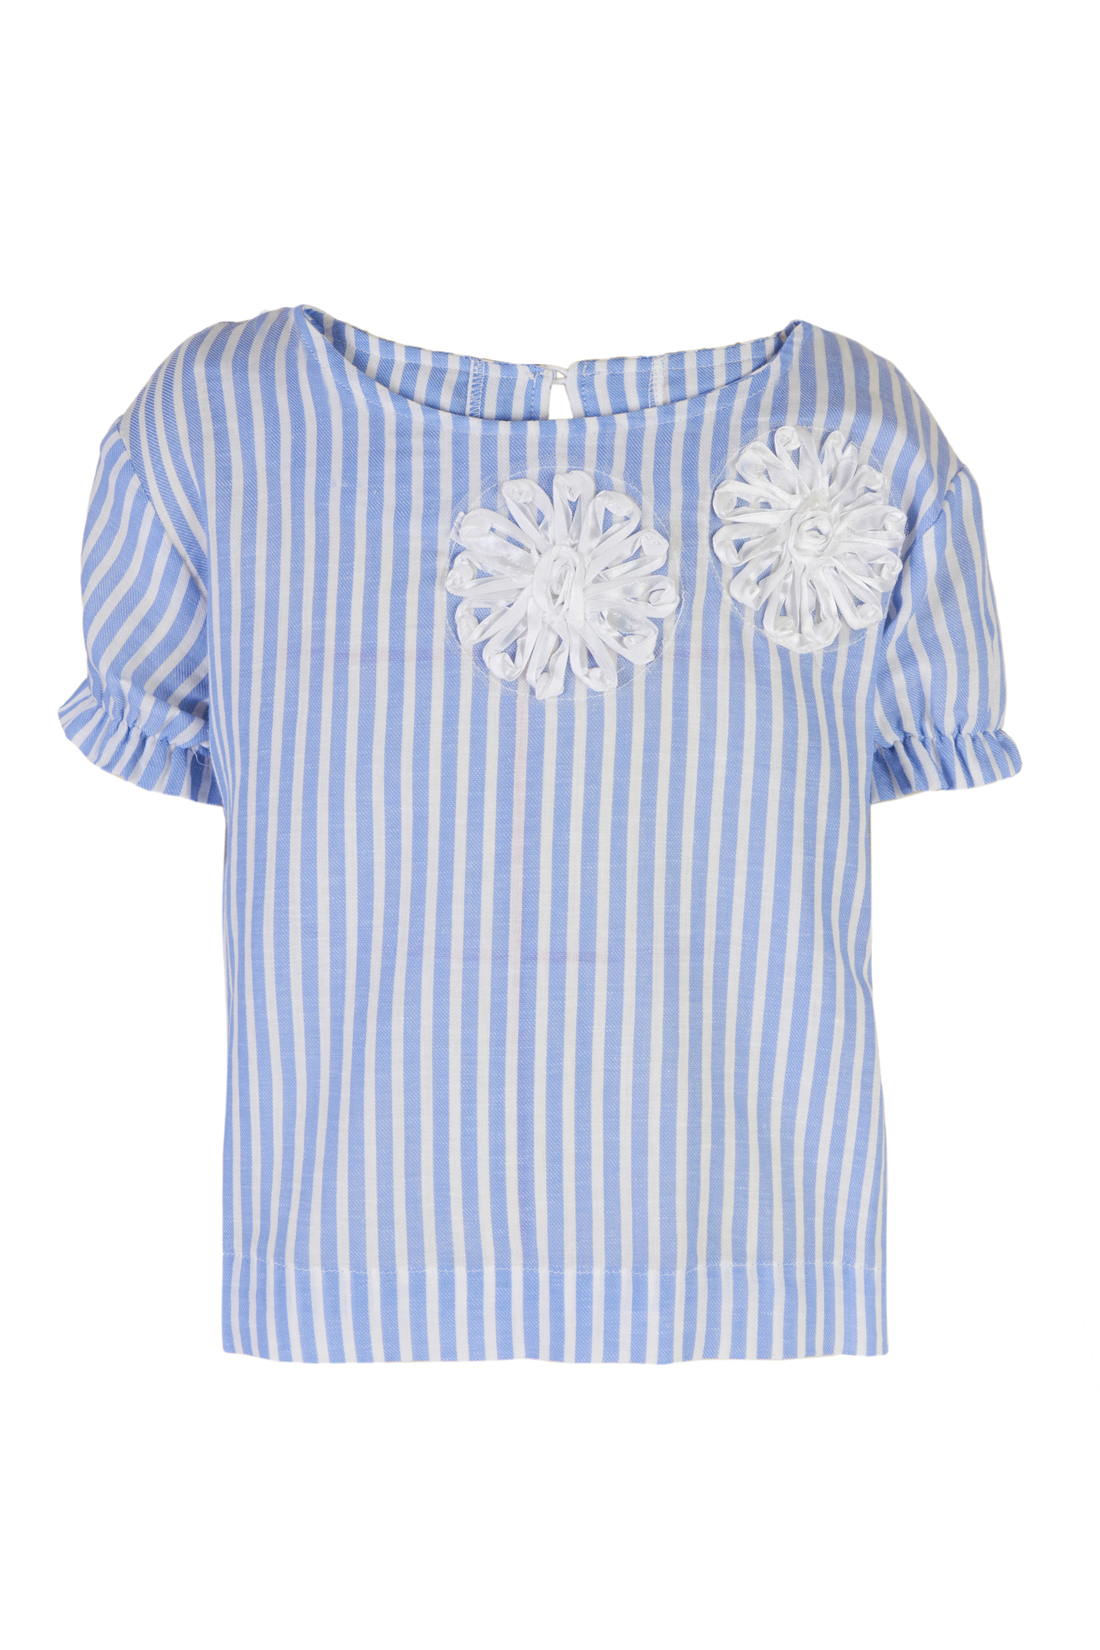 Блузка для девочки (арт. baon BK198002), размер 122-128, цвет angel blue striped#голубой Блузка для девочки (арт. baon BK198002) - фото 3